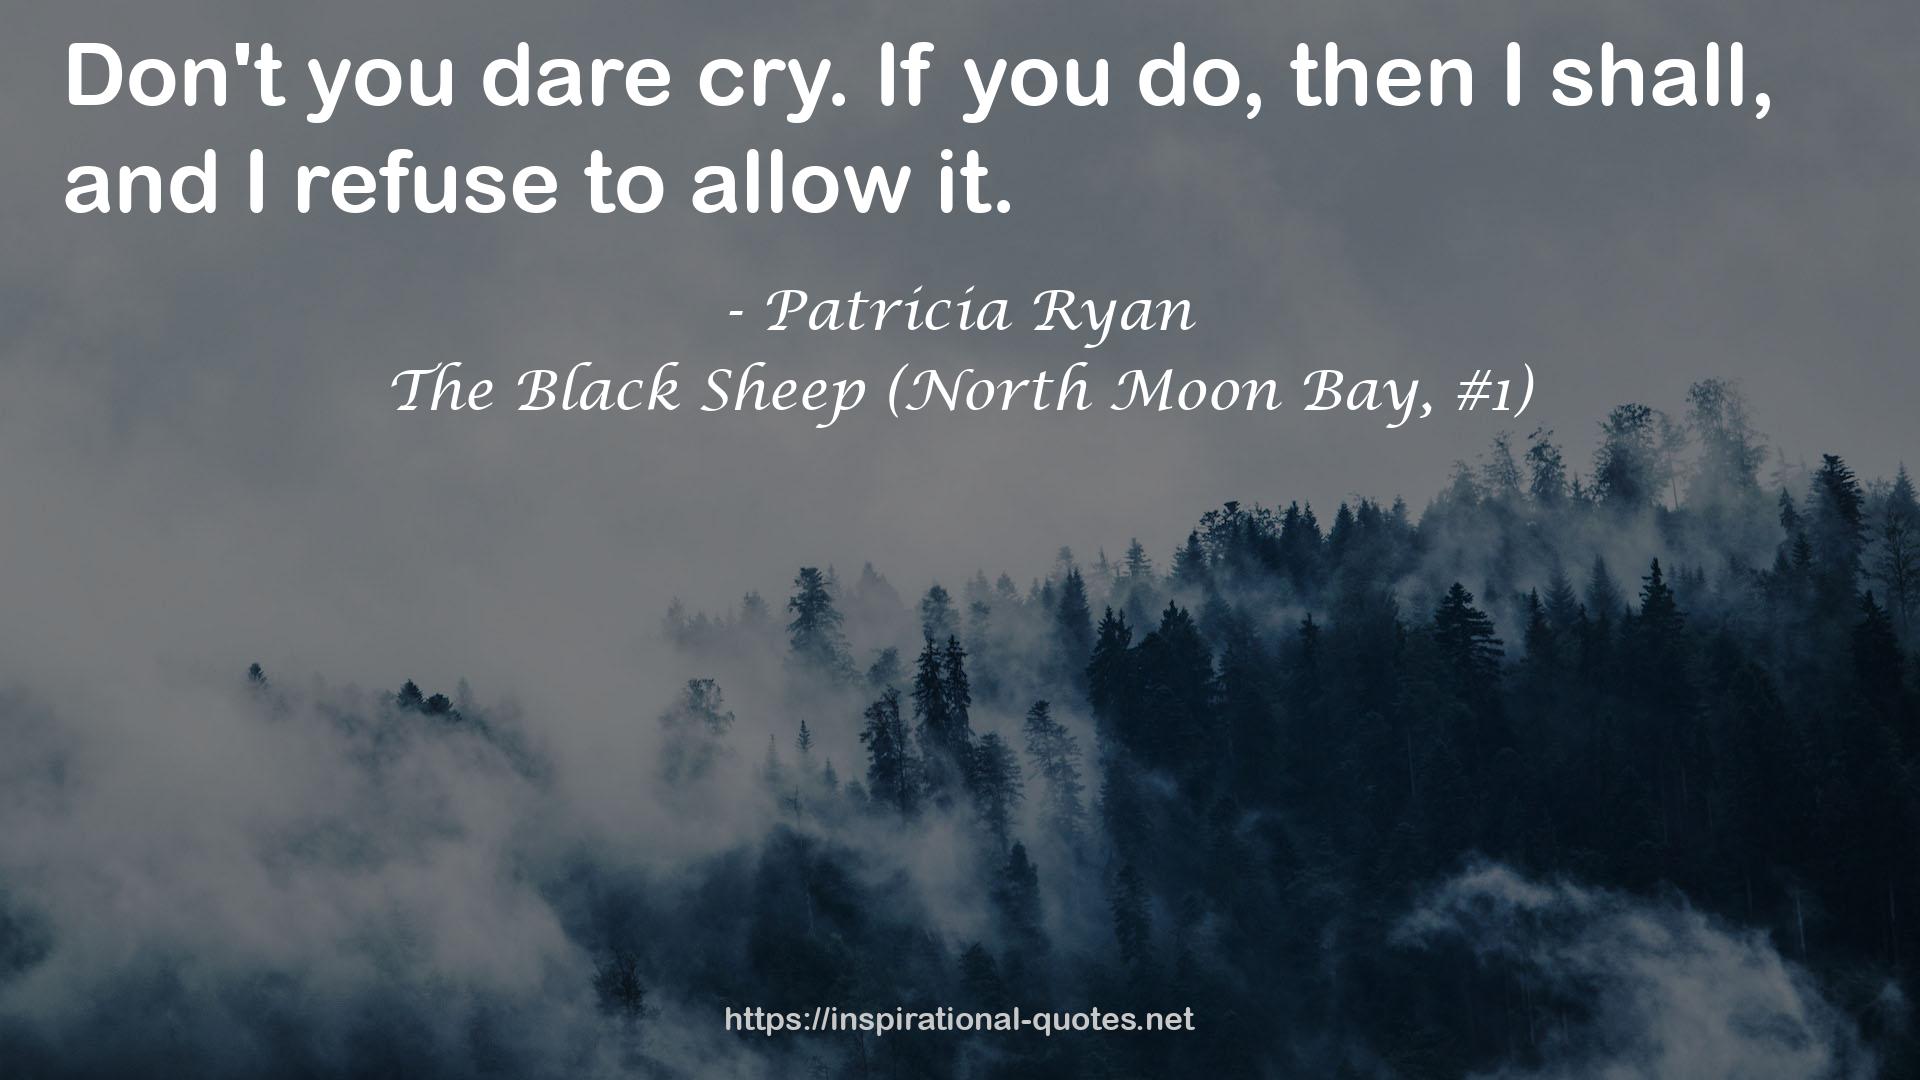 The Black Sheep (North Moon Bay, #1) QUOTES